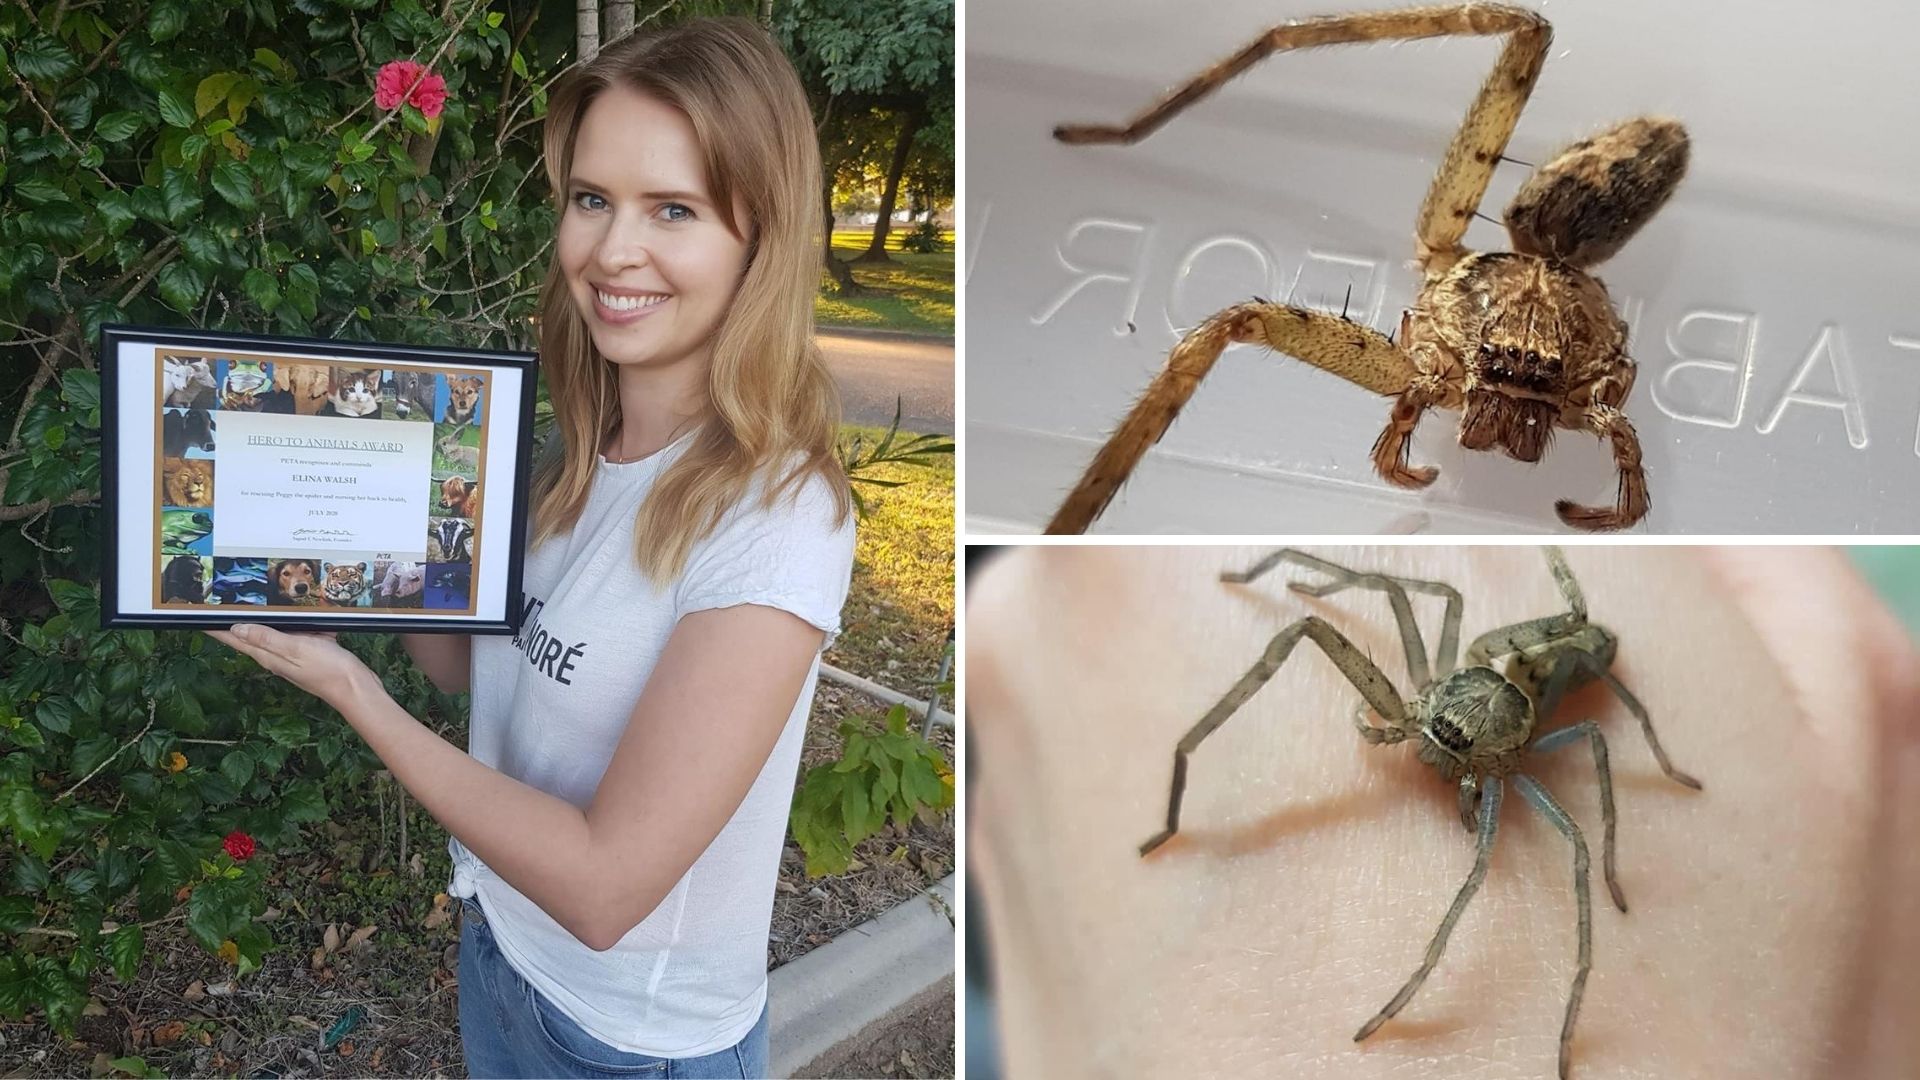 Townsville Woman Nurses Spider to Regrow Her Legs!